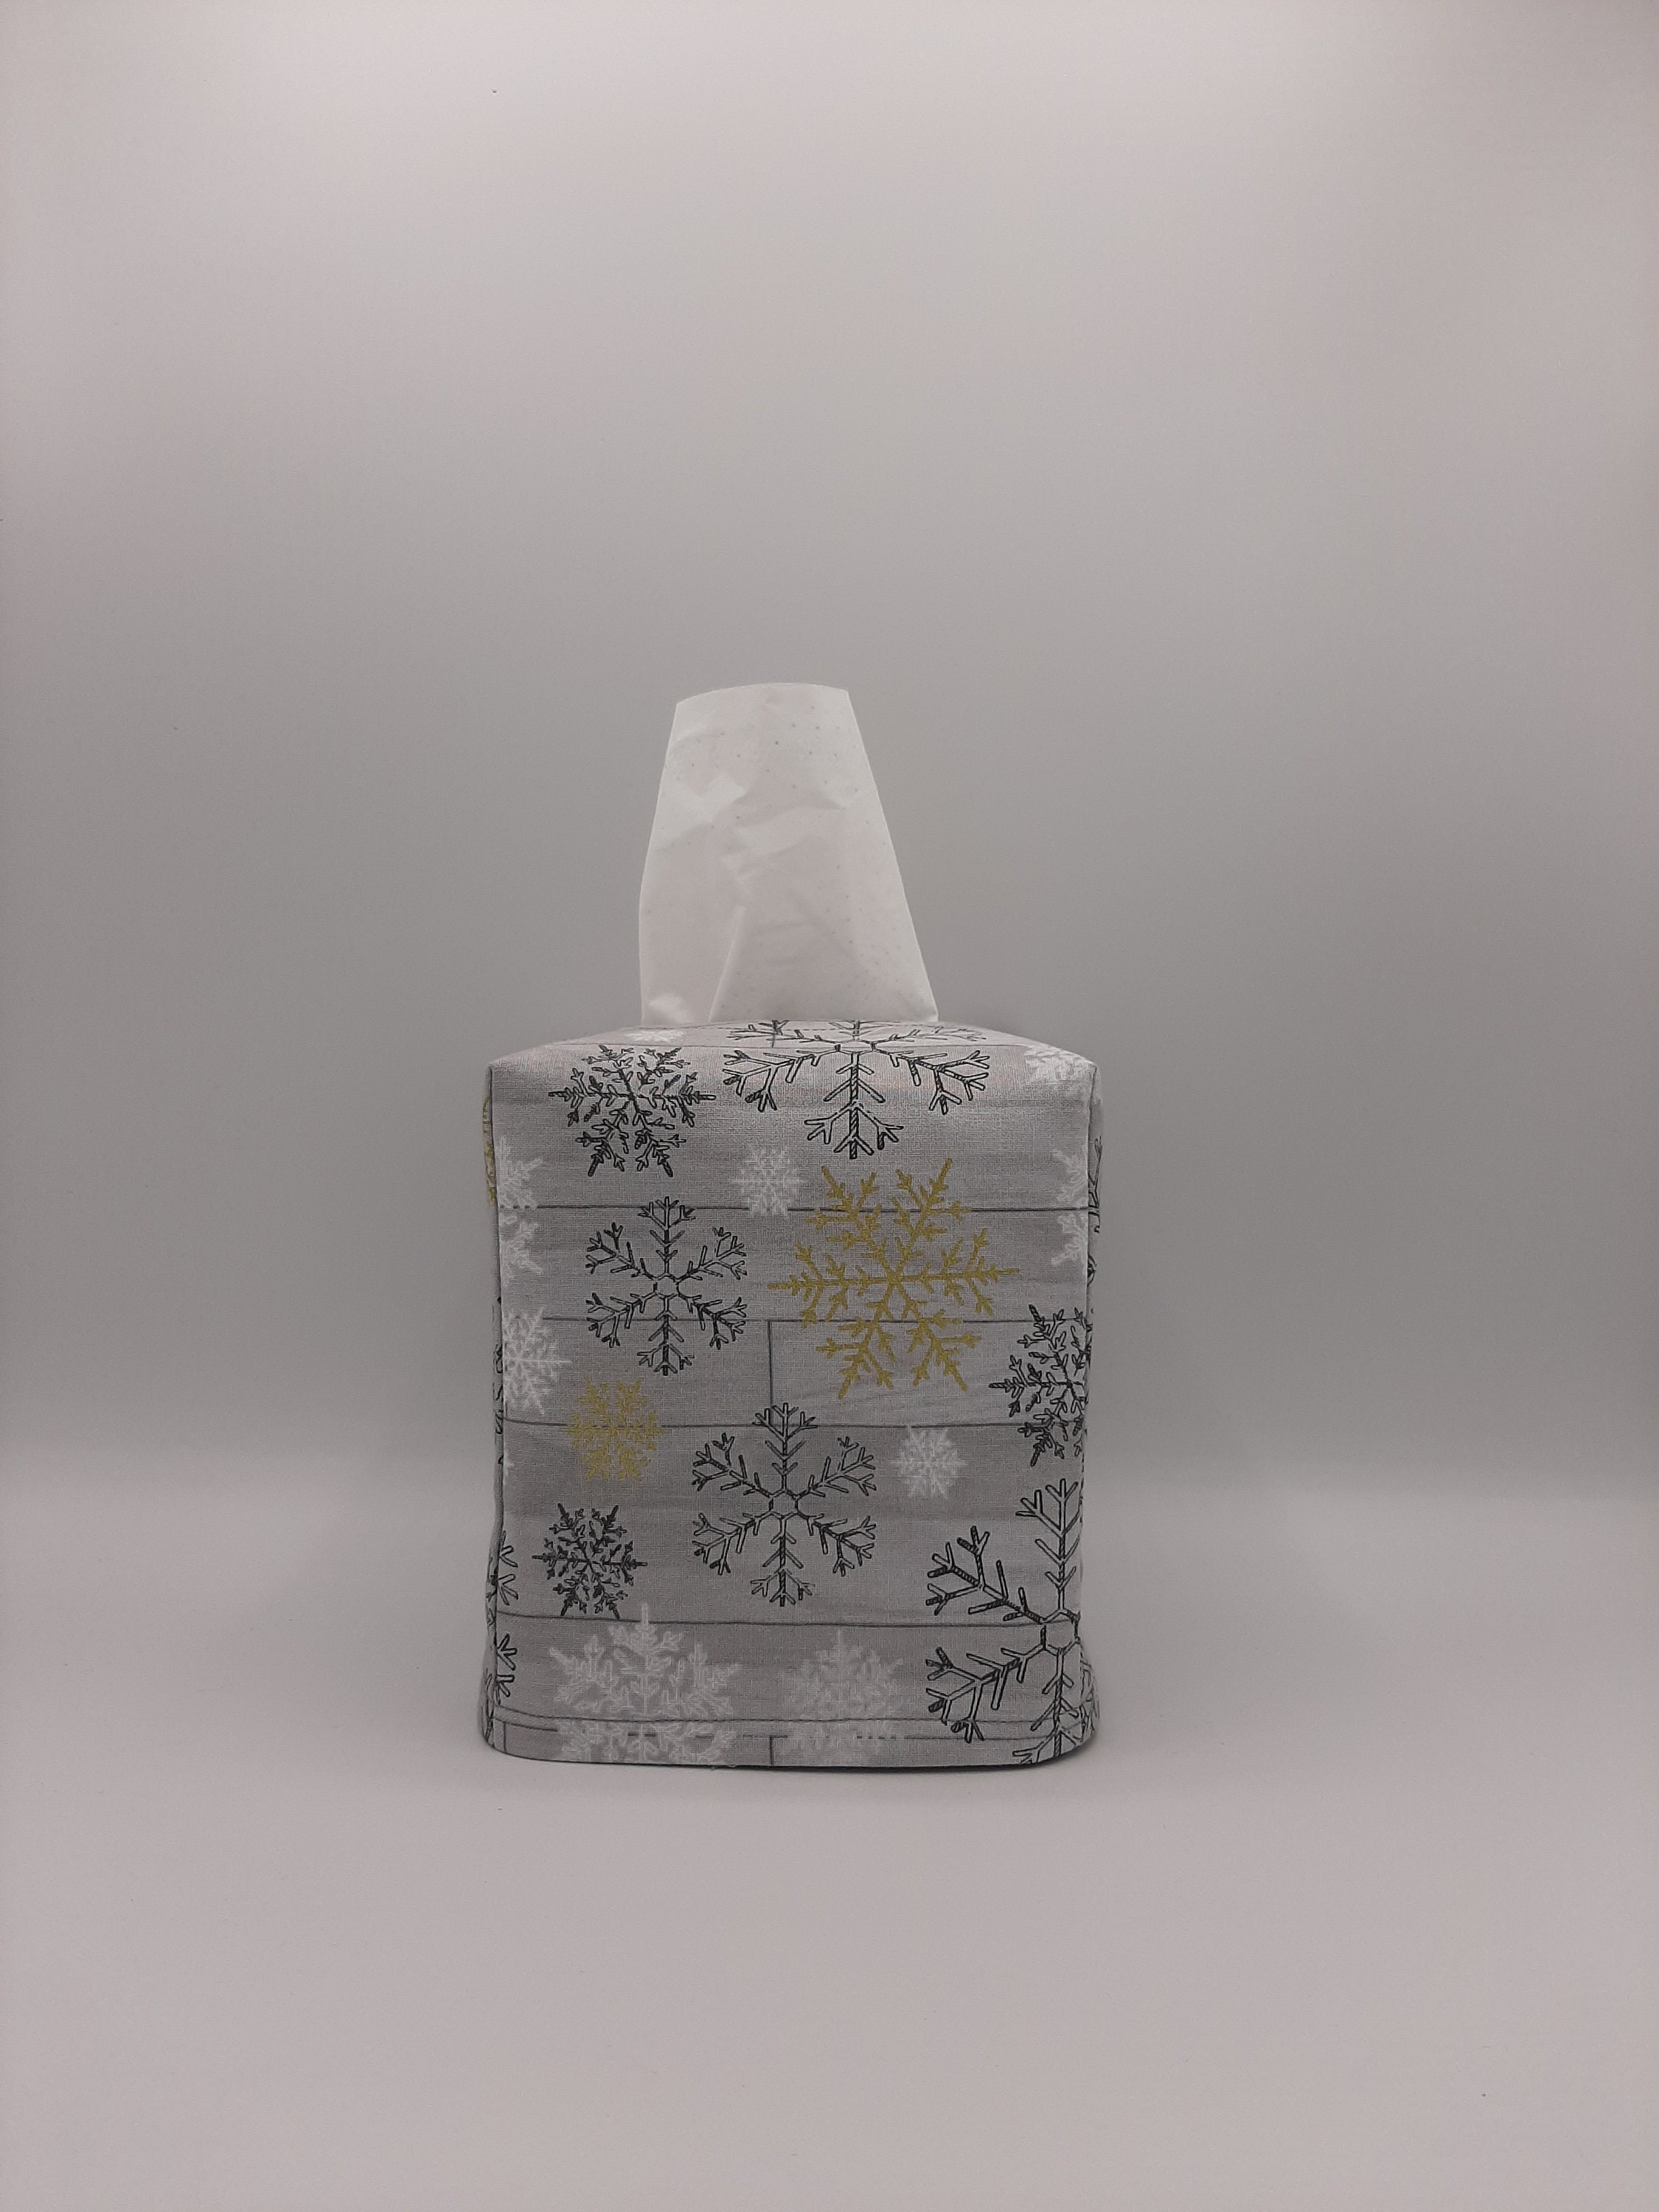  susiyo Christmas Snowflakes and Stars Tissue Box Cover